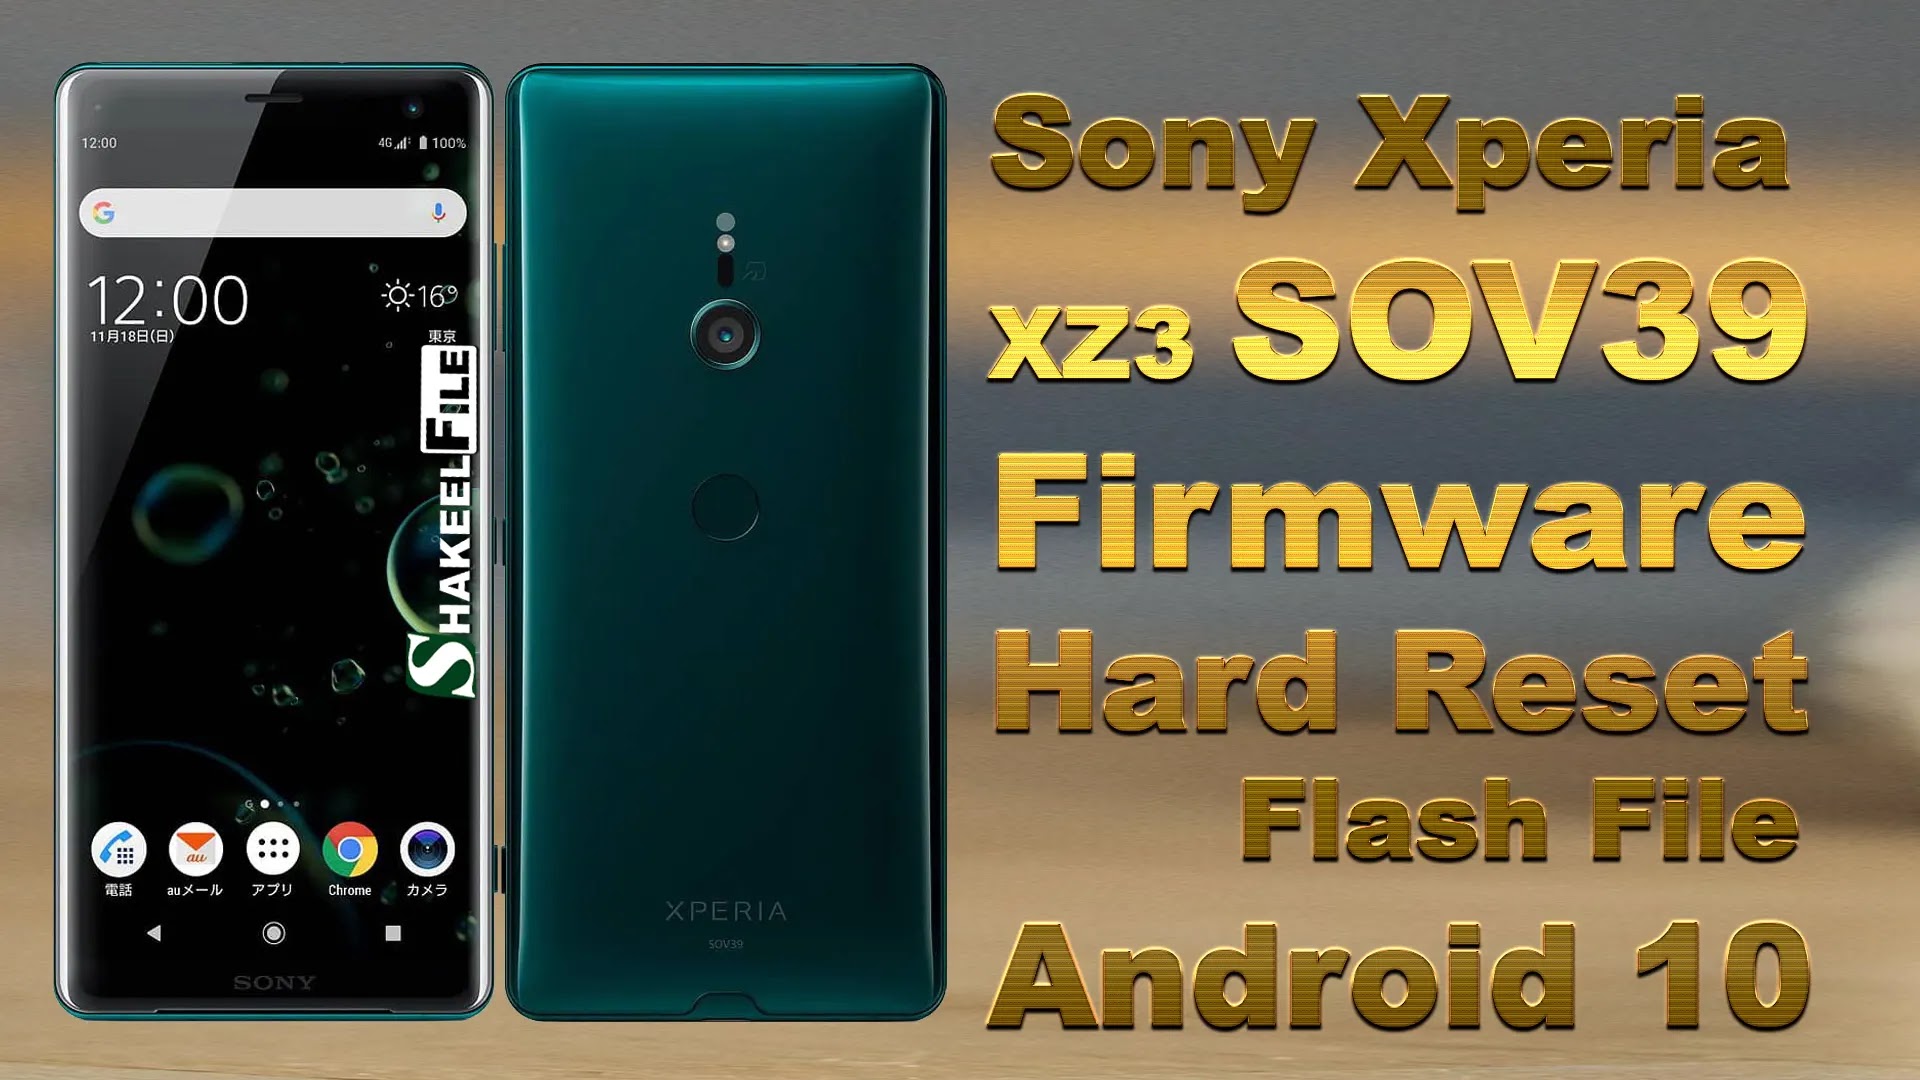 Sony-Xperia-XZ3-SOV39-Firmware-Hard-Reset-Flash-File